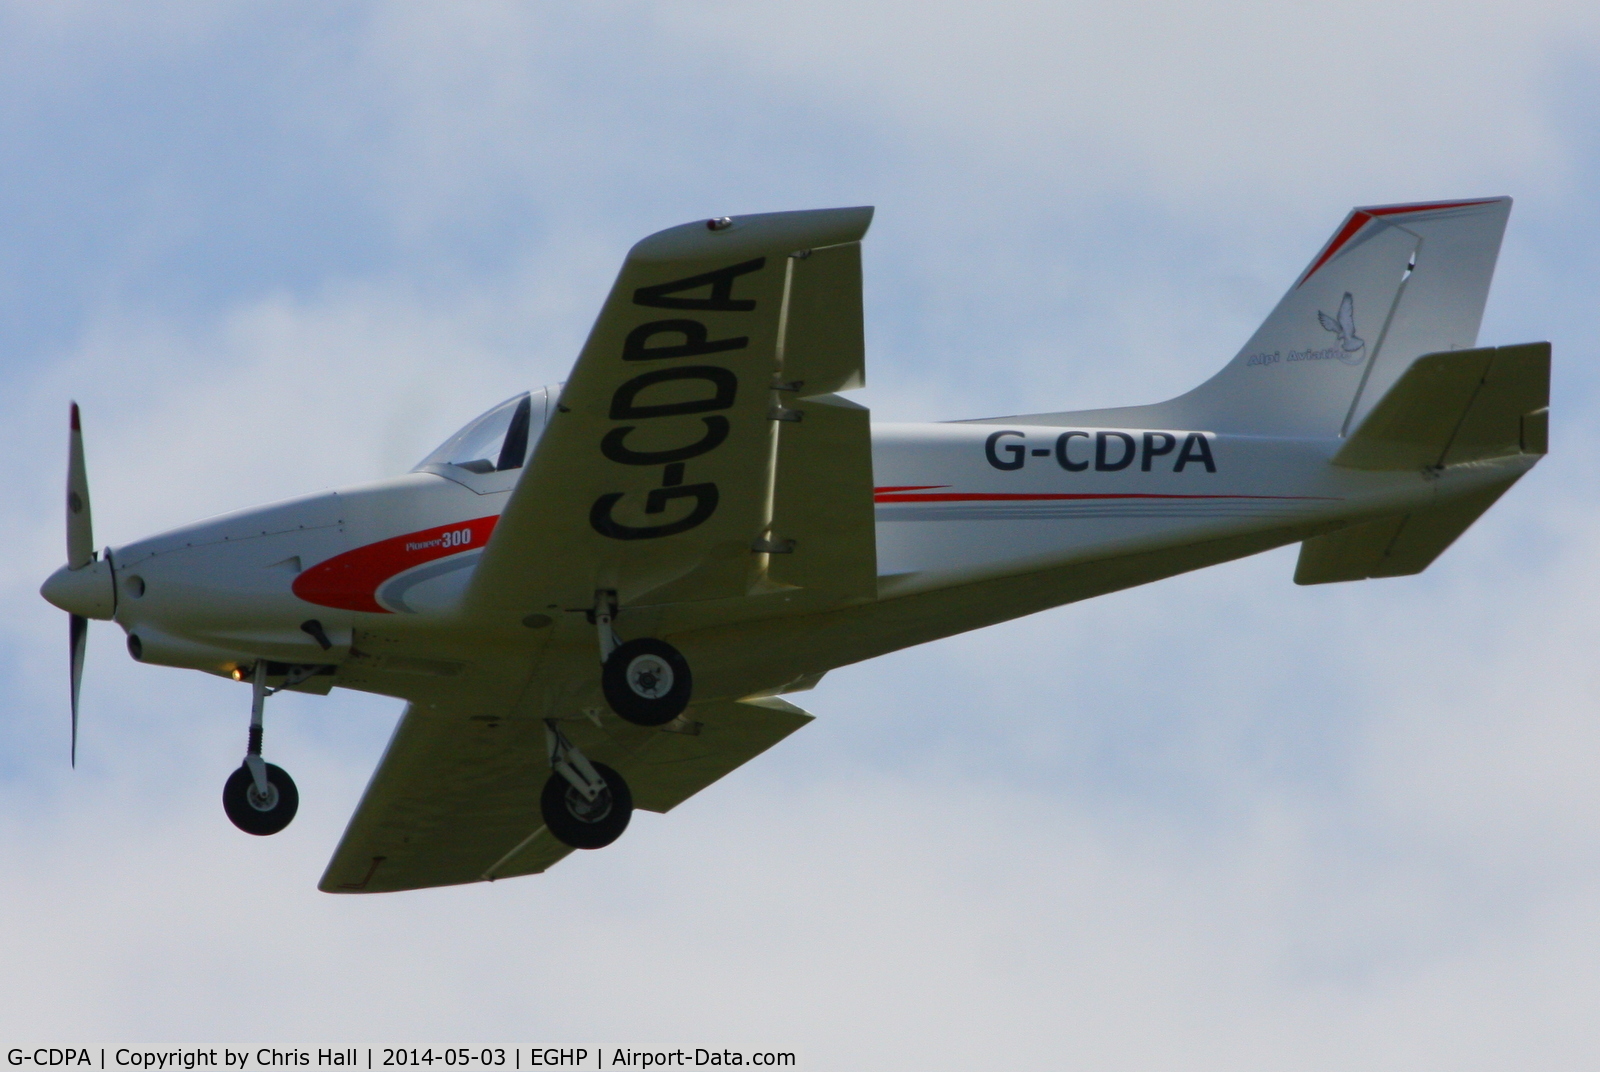 G-CDPA, 2005 Alpi Aviation Pioneer 300 C/N PFA 330-14415, at the 2014 Microlight Trade Fair, Popham